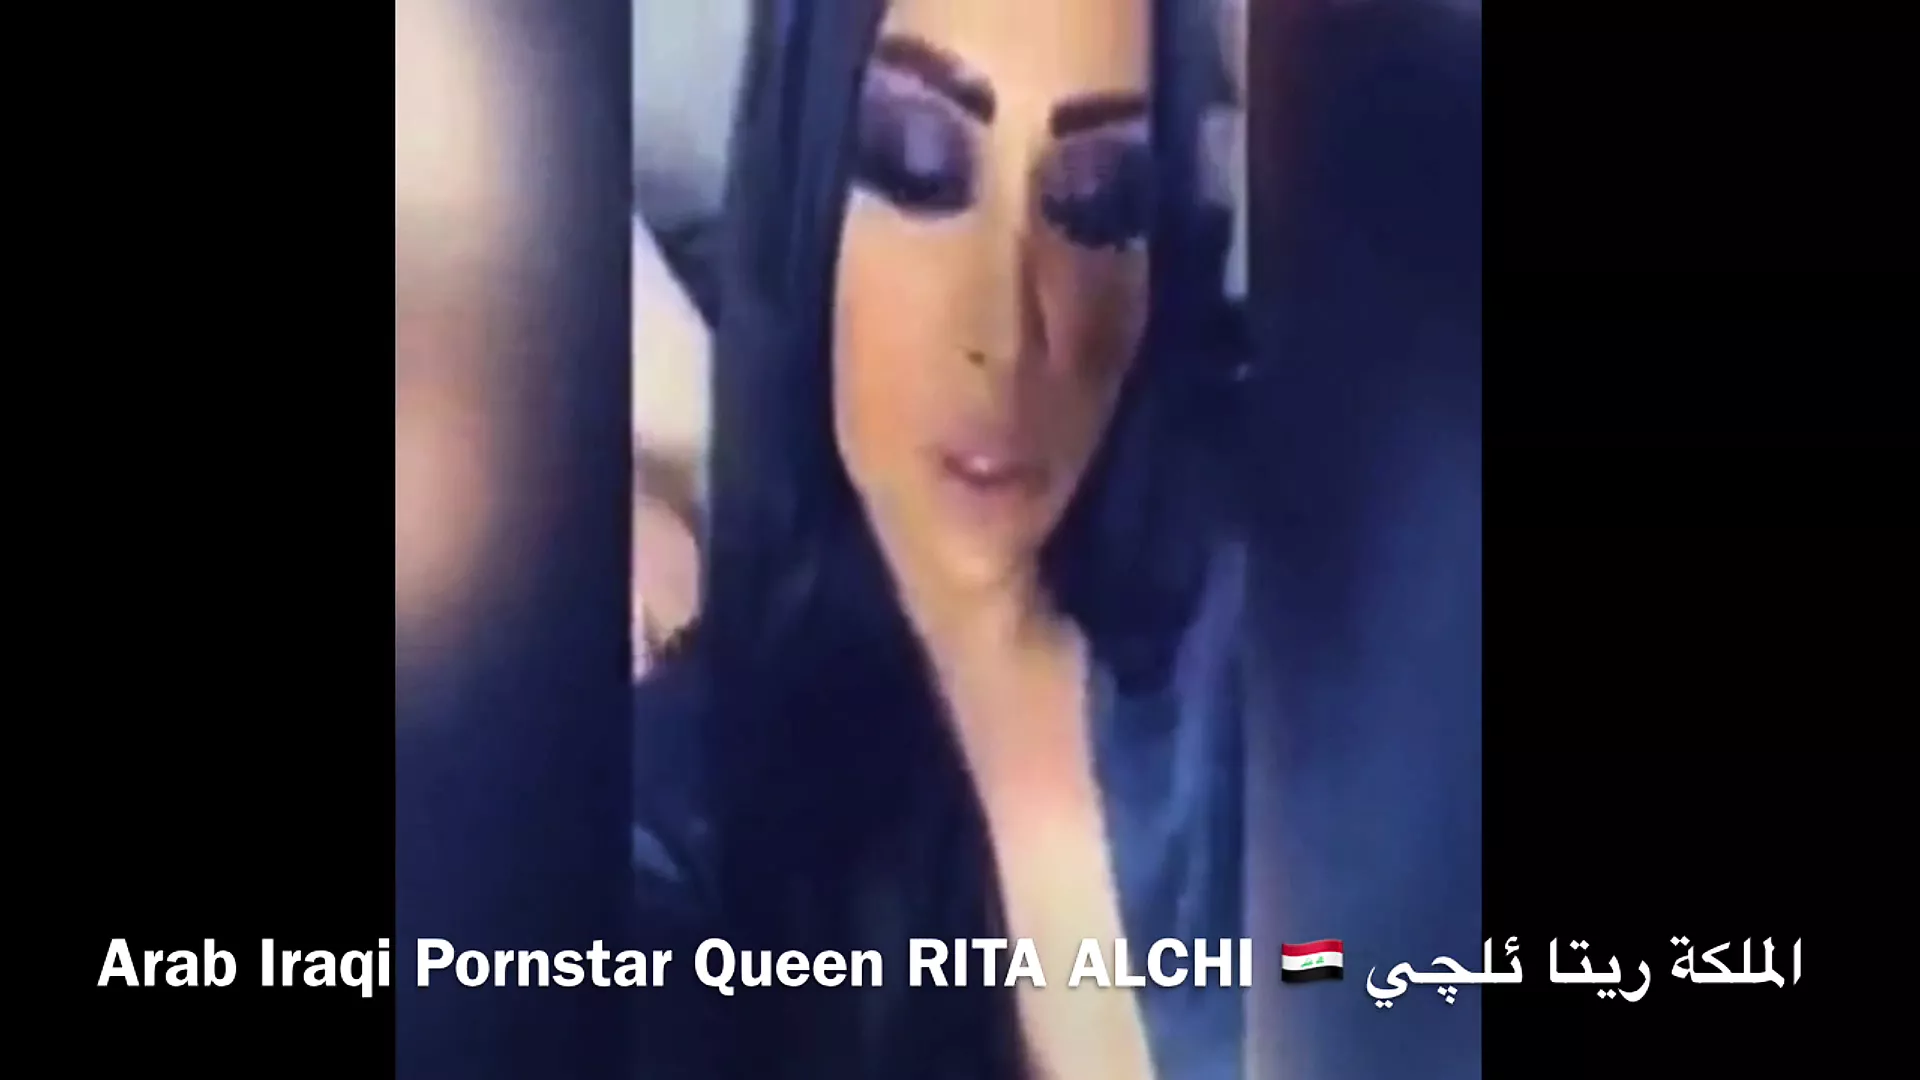 Arab Sex Star - Arab Iraqi Porn Star Rita Alchi Sex Mission in Hotel | xHamster